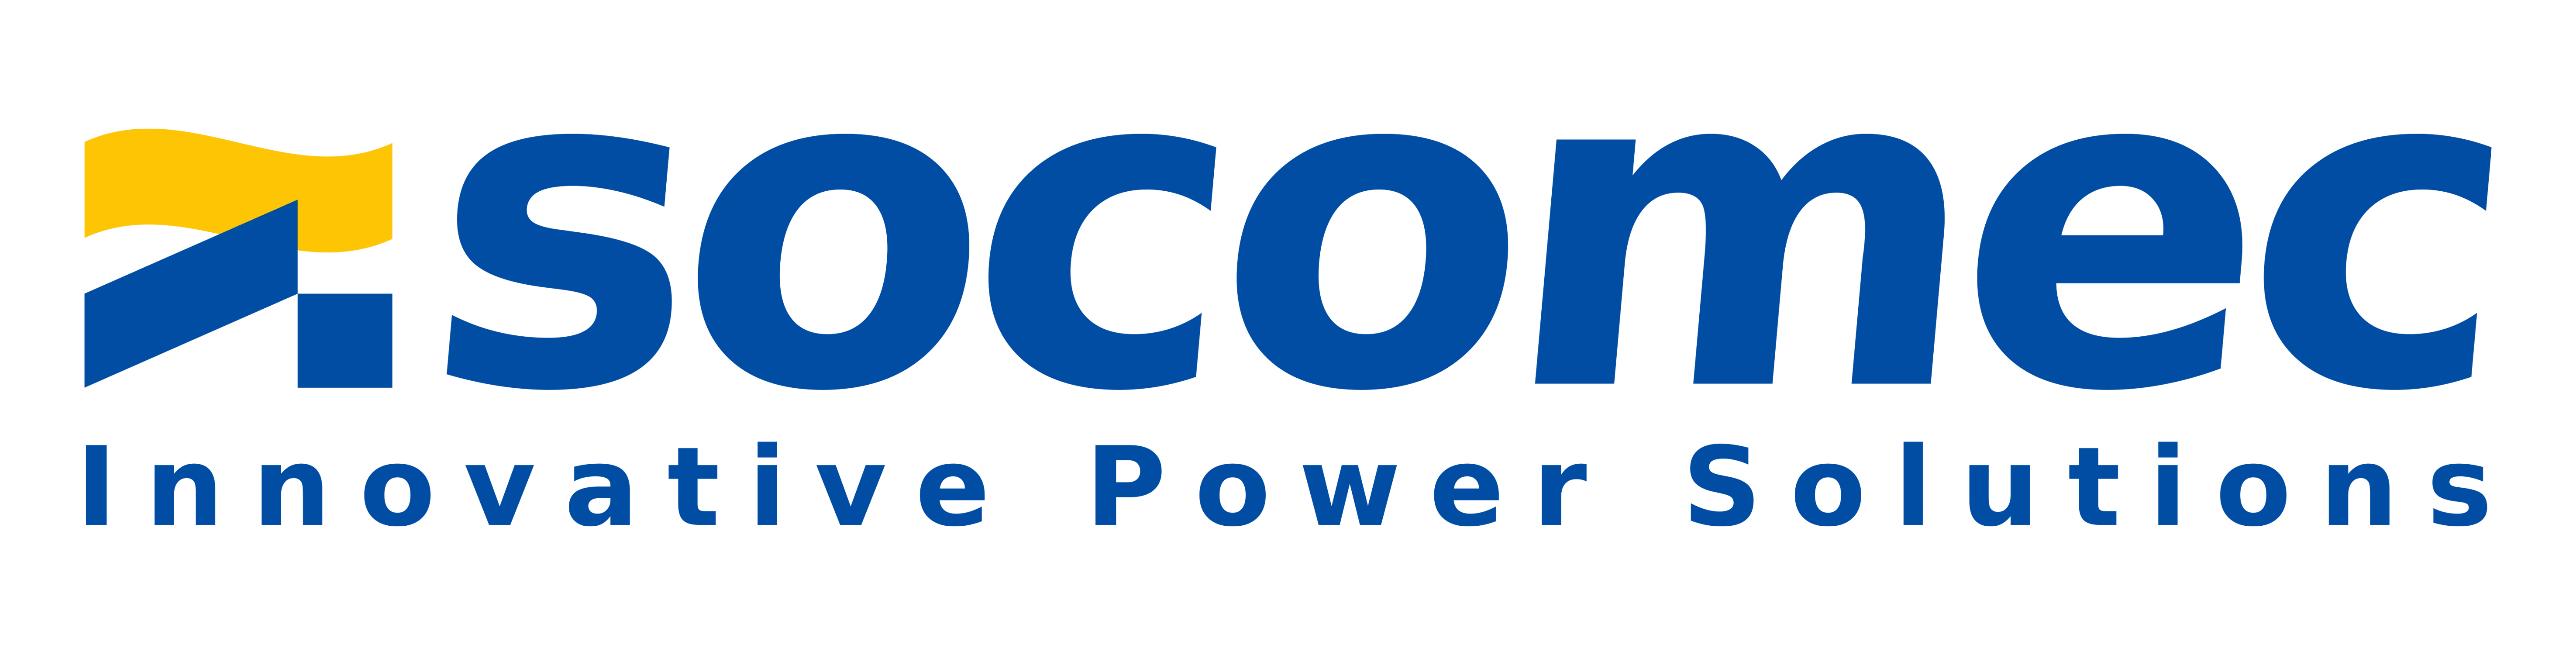 Socomecs logotyp